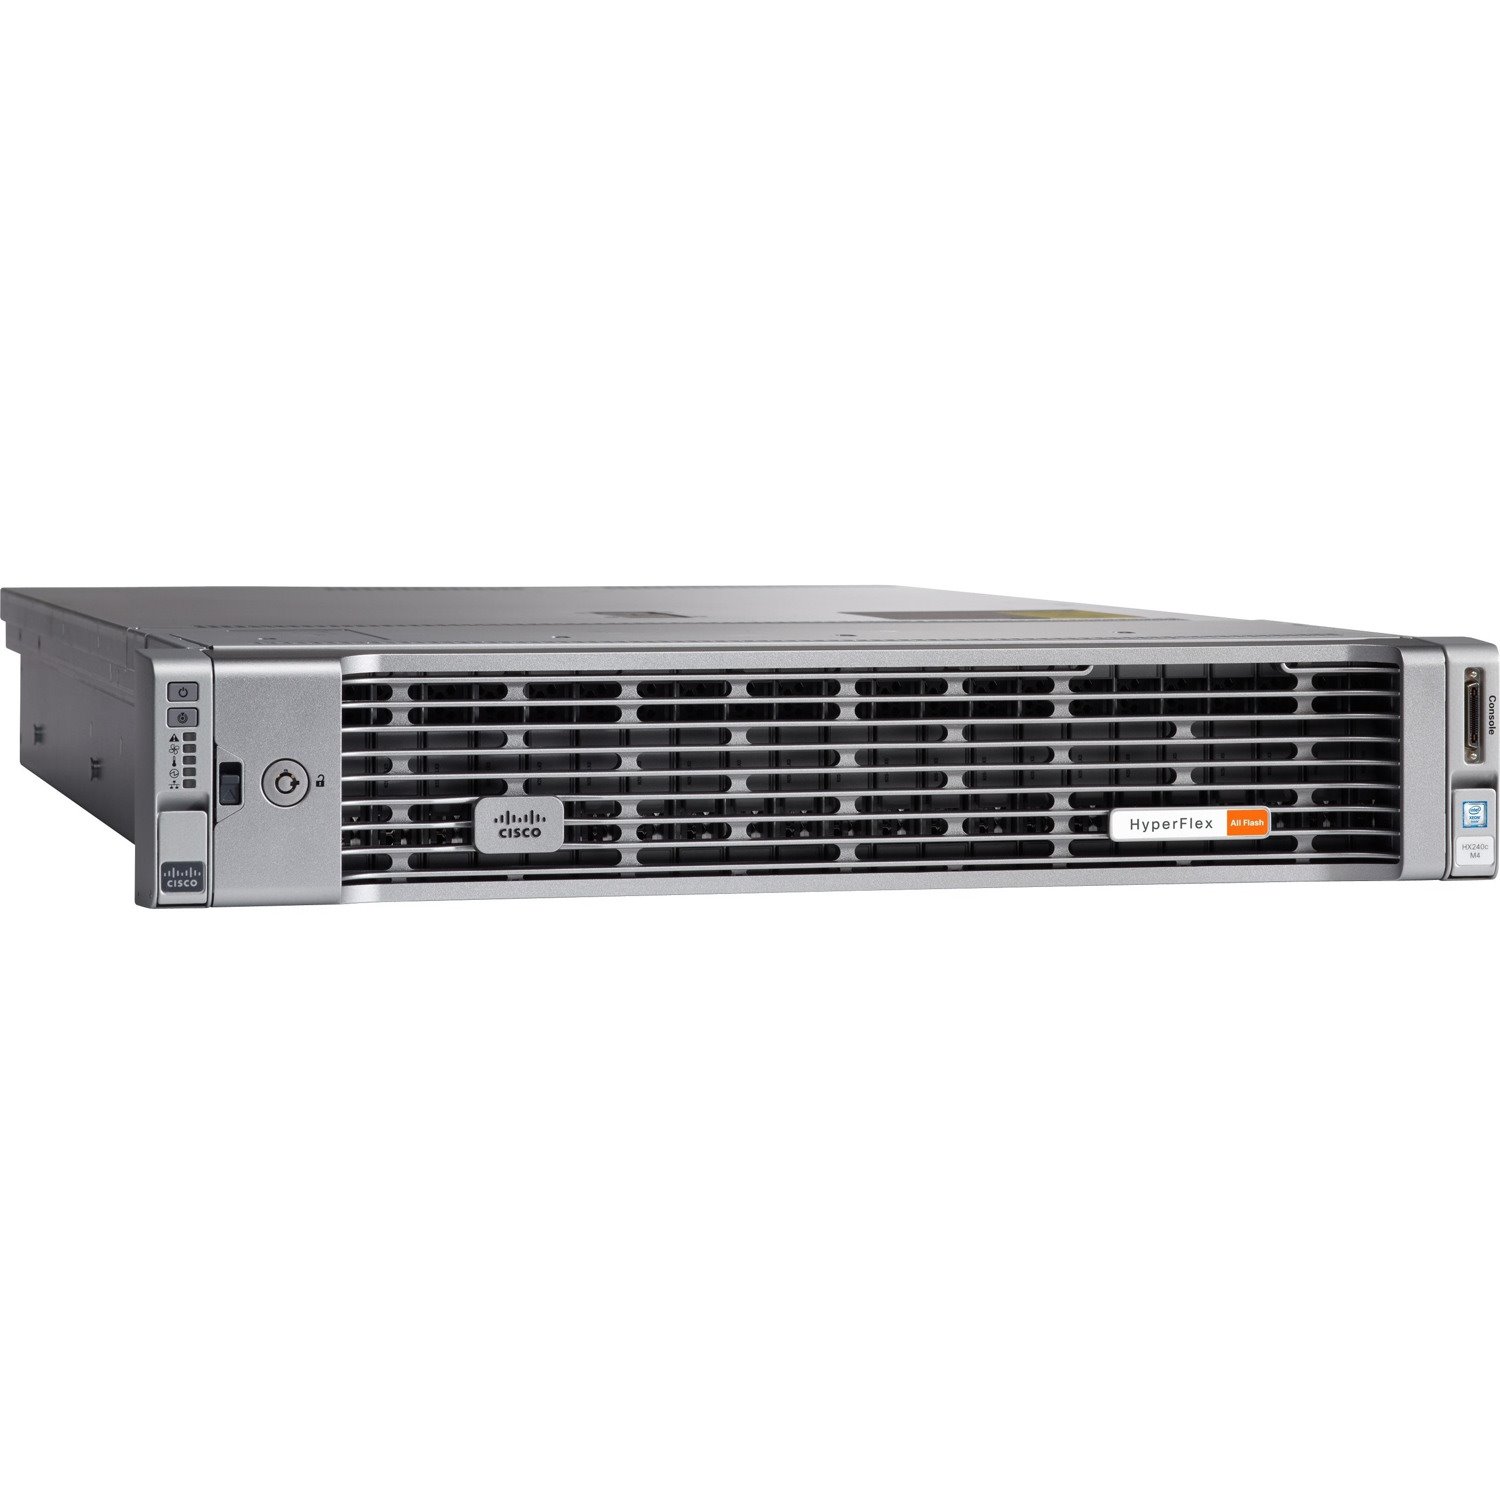 Cisco HyperFlex HX240c M4 2U Rack Server - 2 x Intel Xeon E5-2630 v3 2.40 GHz - 128 GB RAM - 12Gb/s SAS Controller